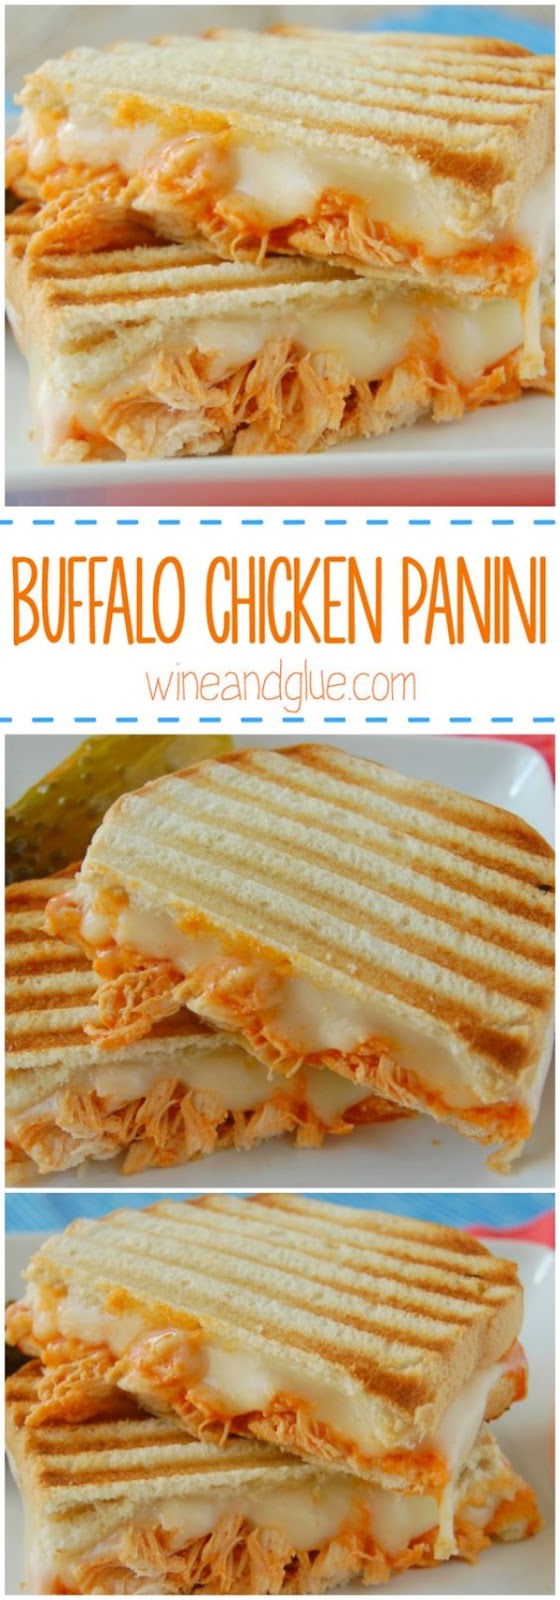 Buffalo Chicken Panini Recipes – Home Inspiration and DIY Crafts Ideas